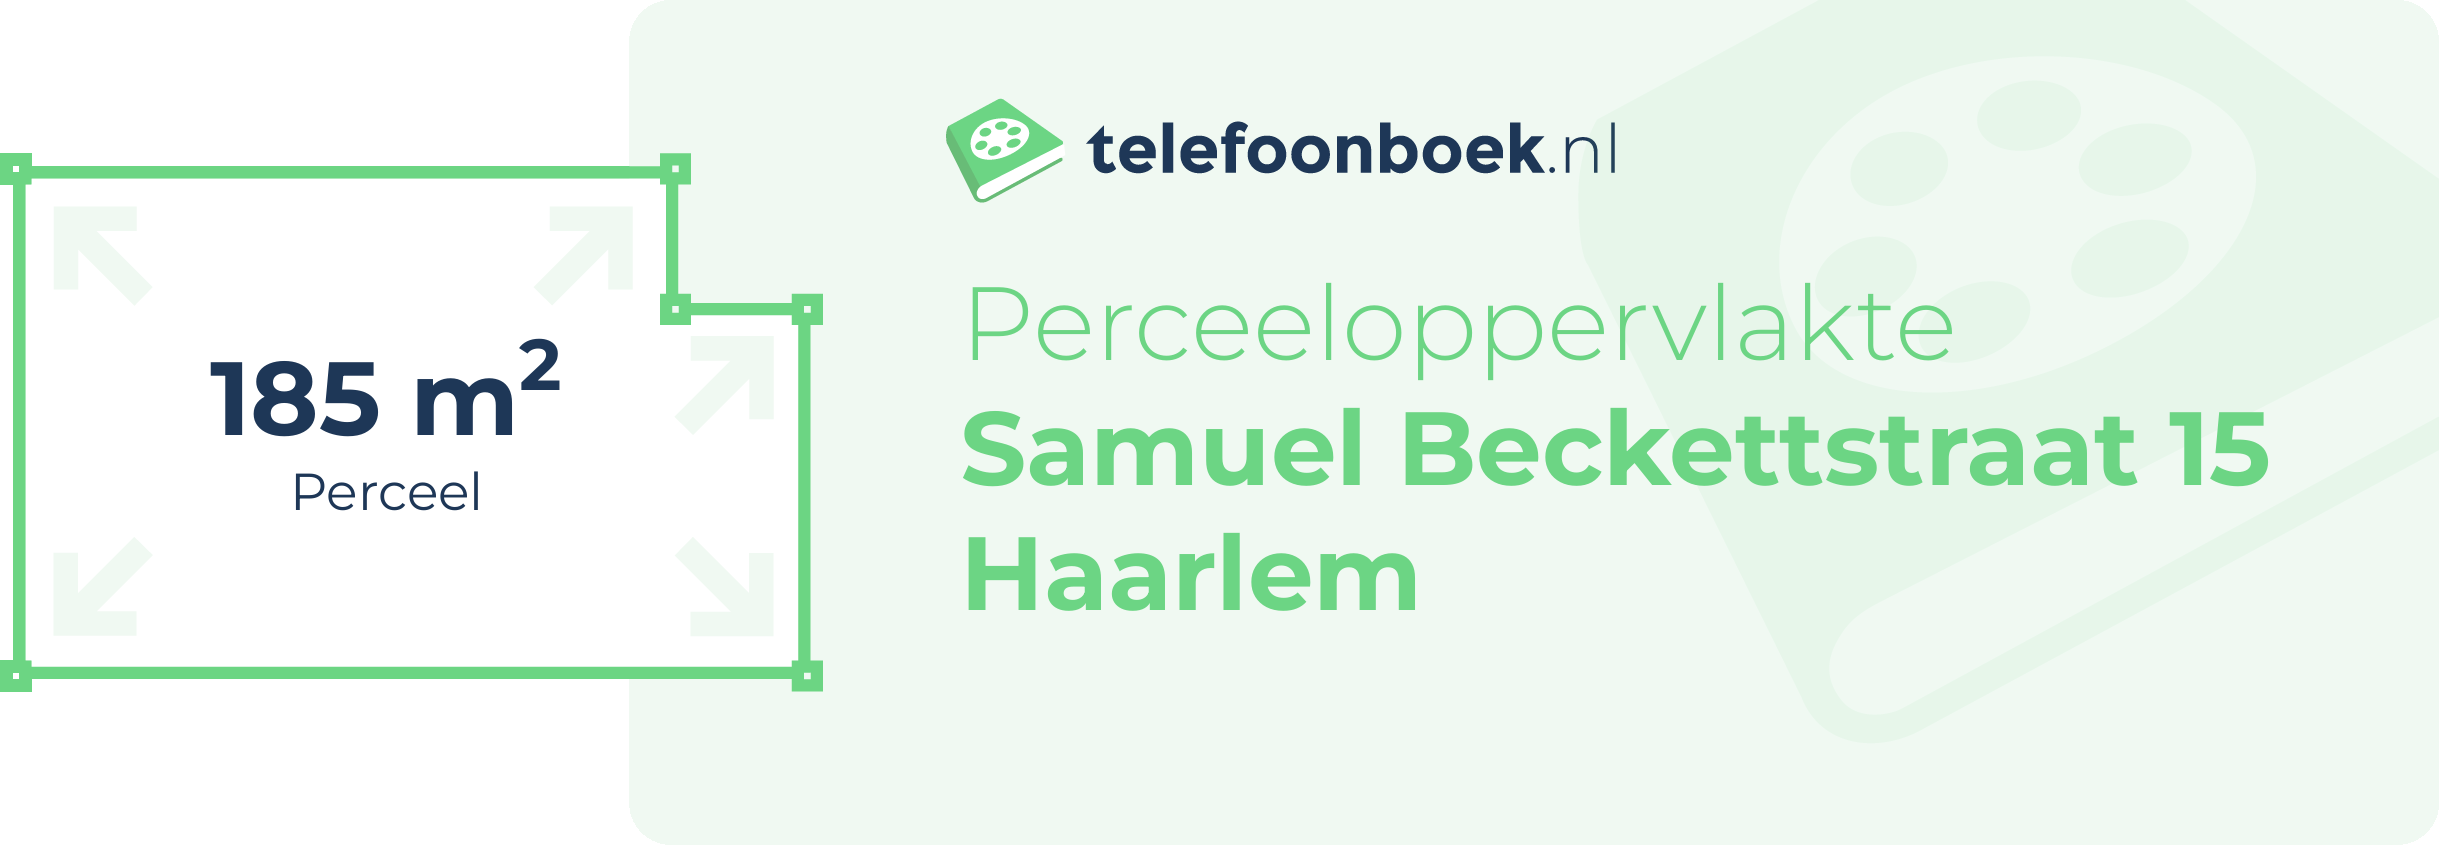 Perceeloppervlakte Samuel Beckettstraat 15 Haarlem